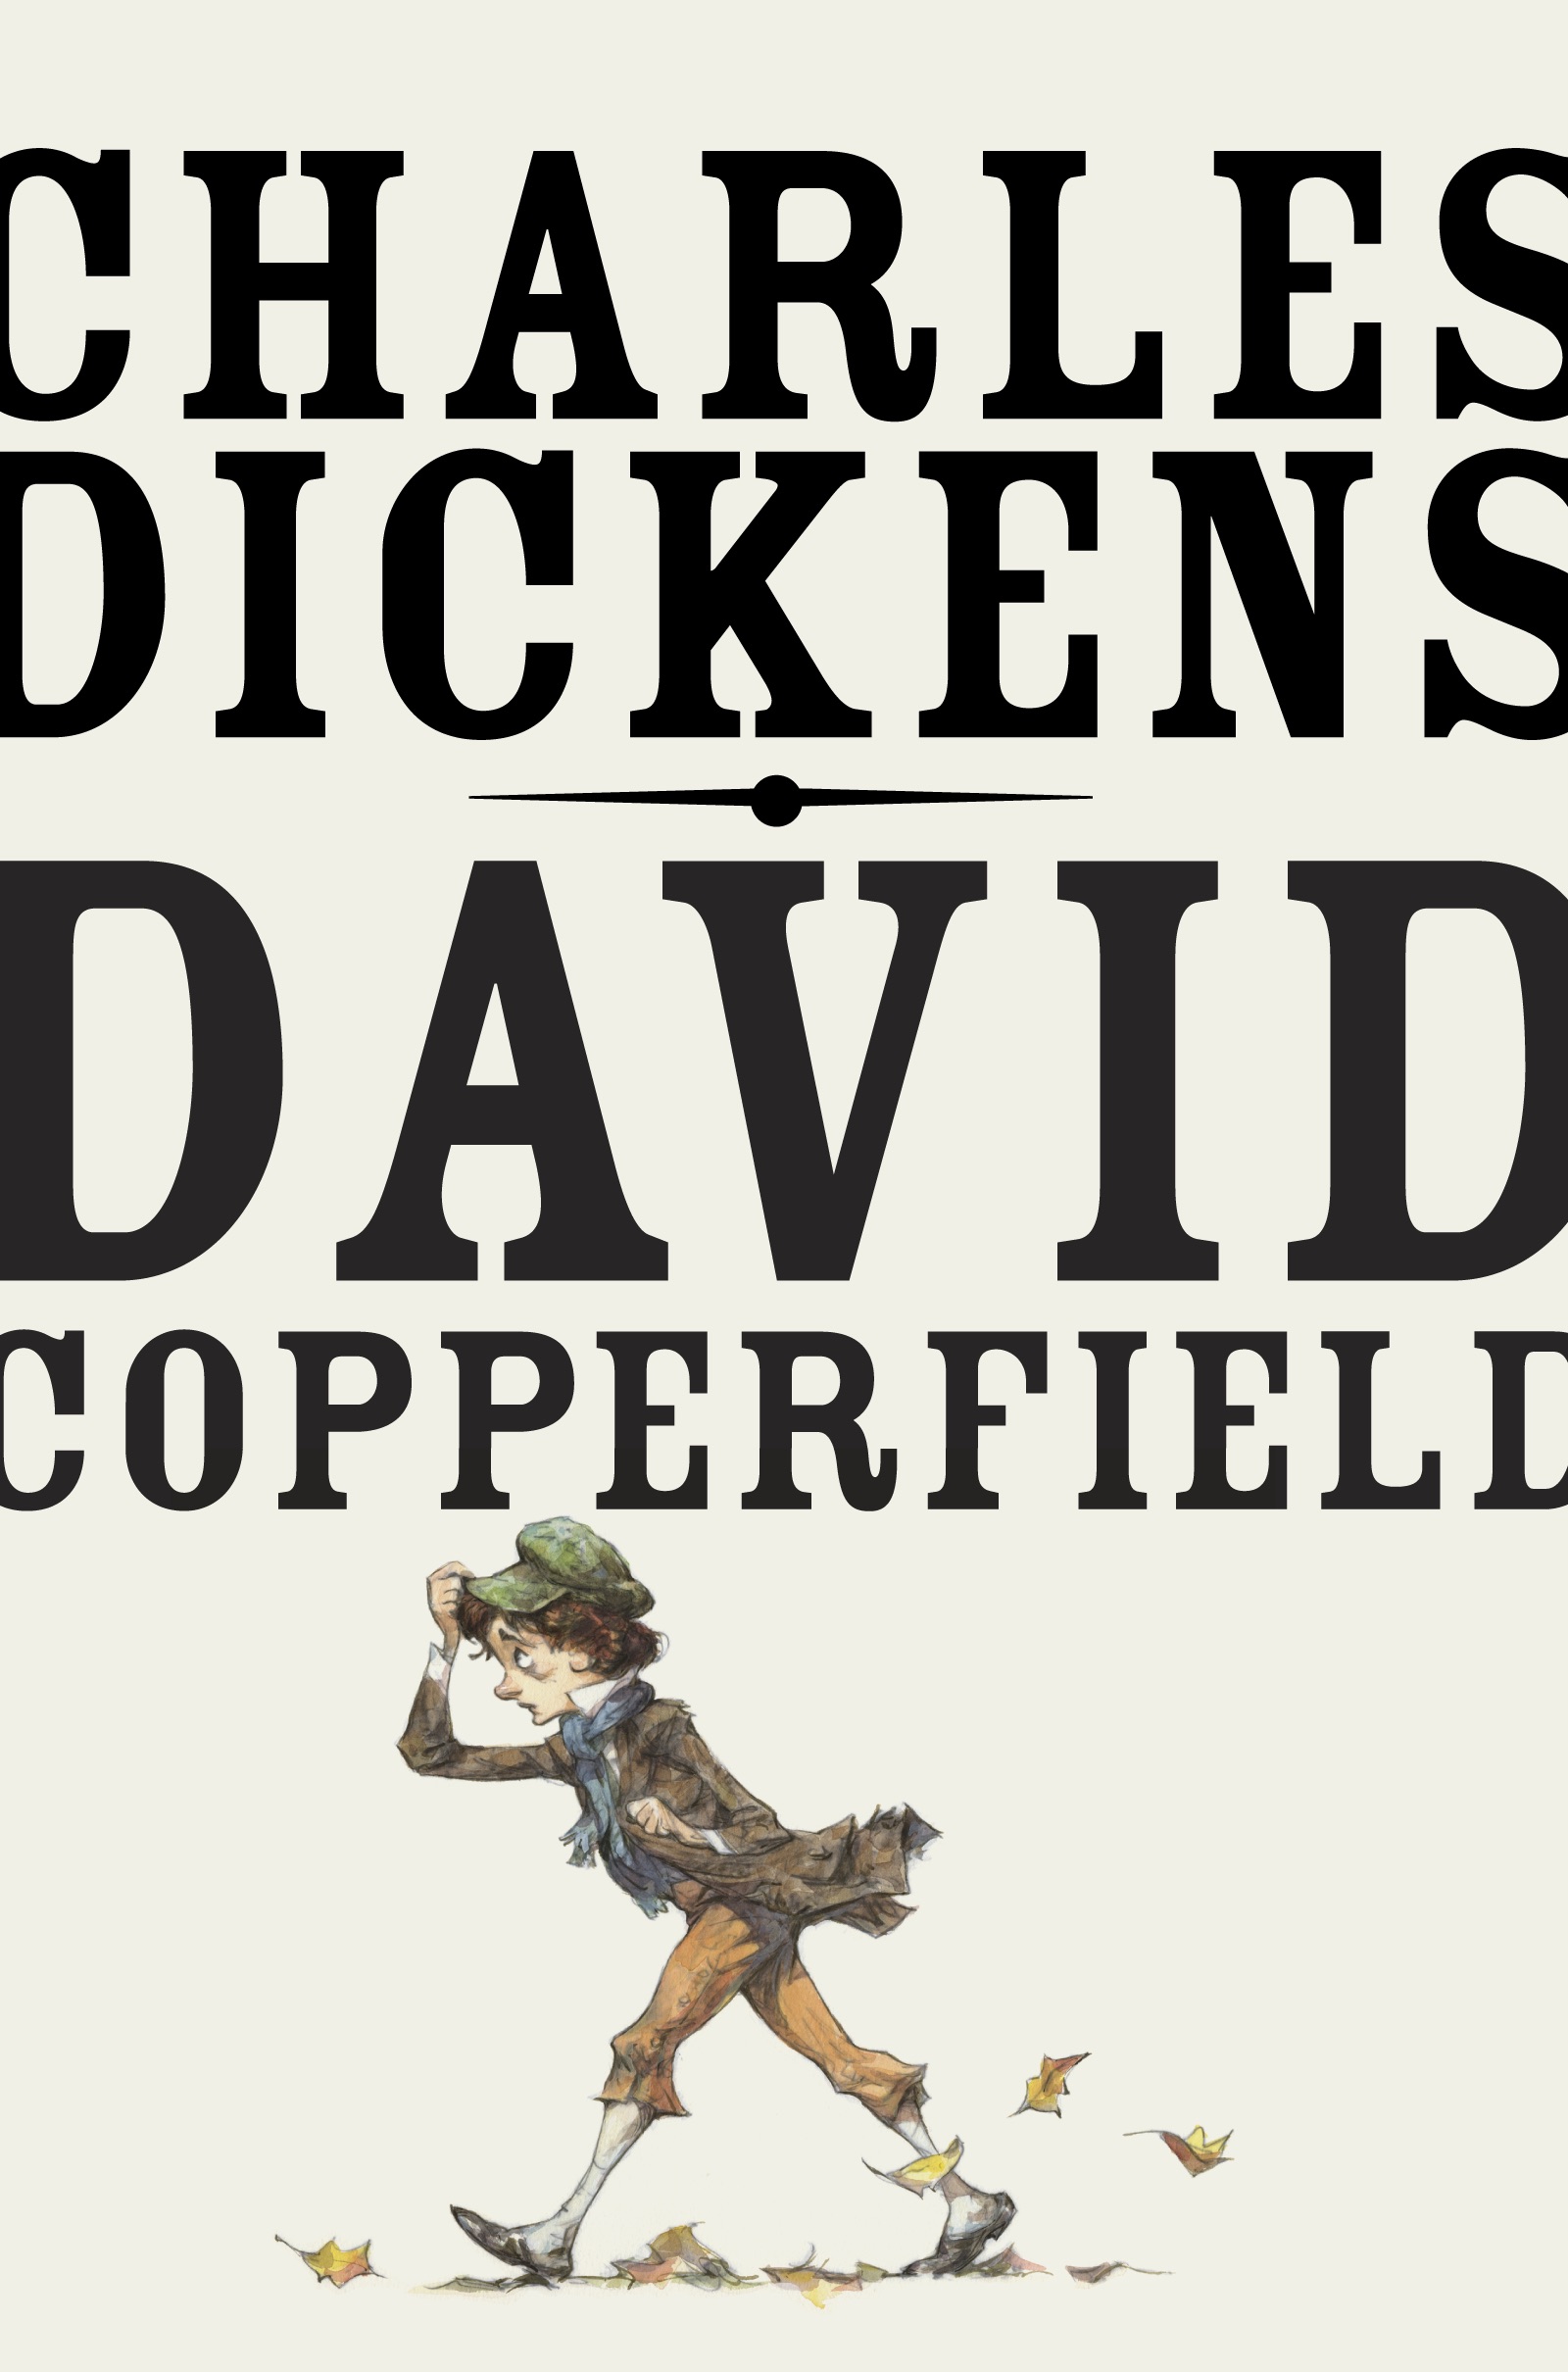 david copperfield novel